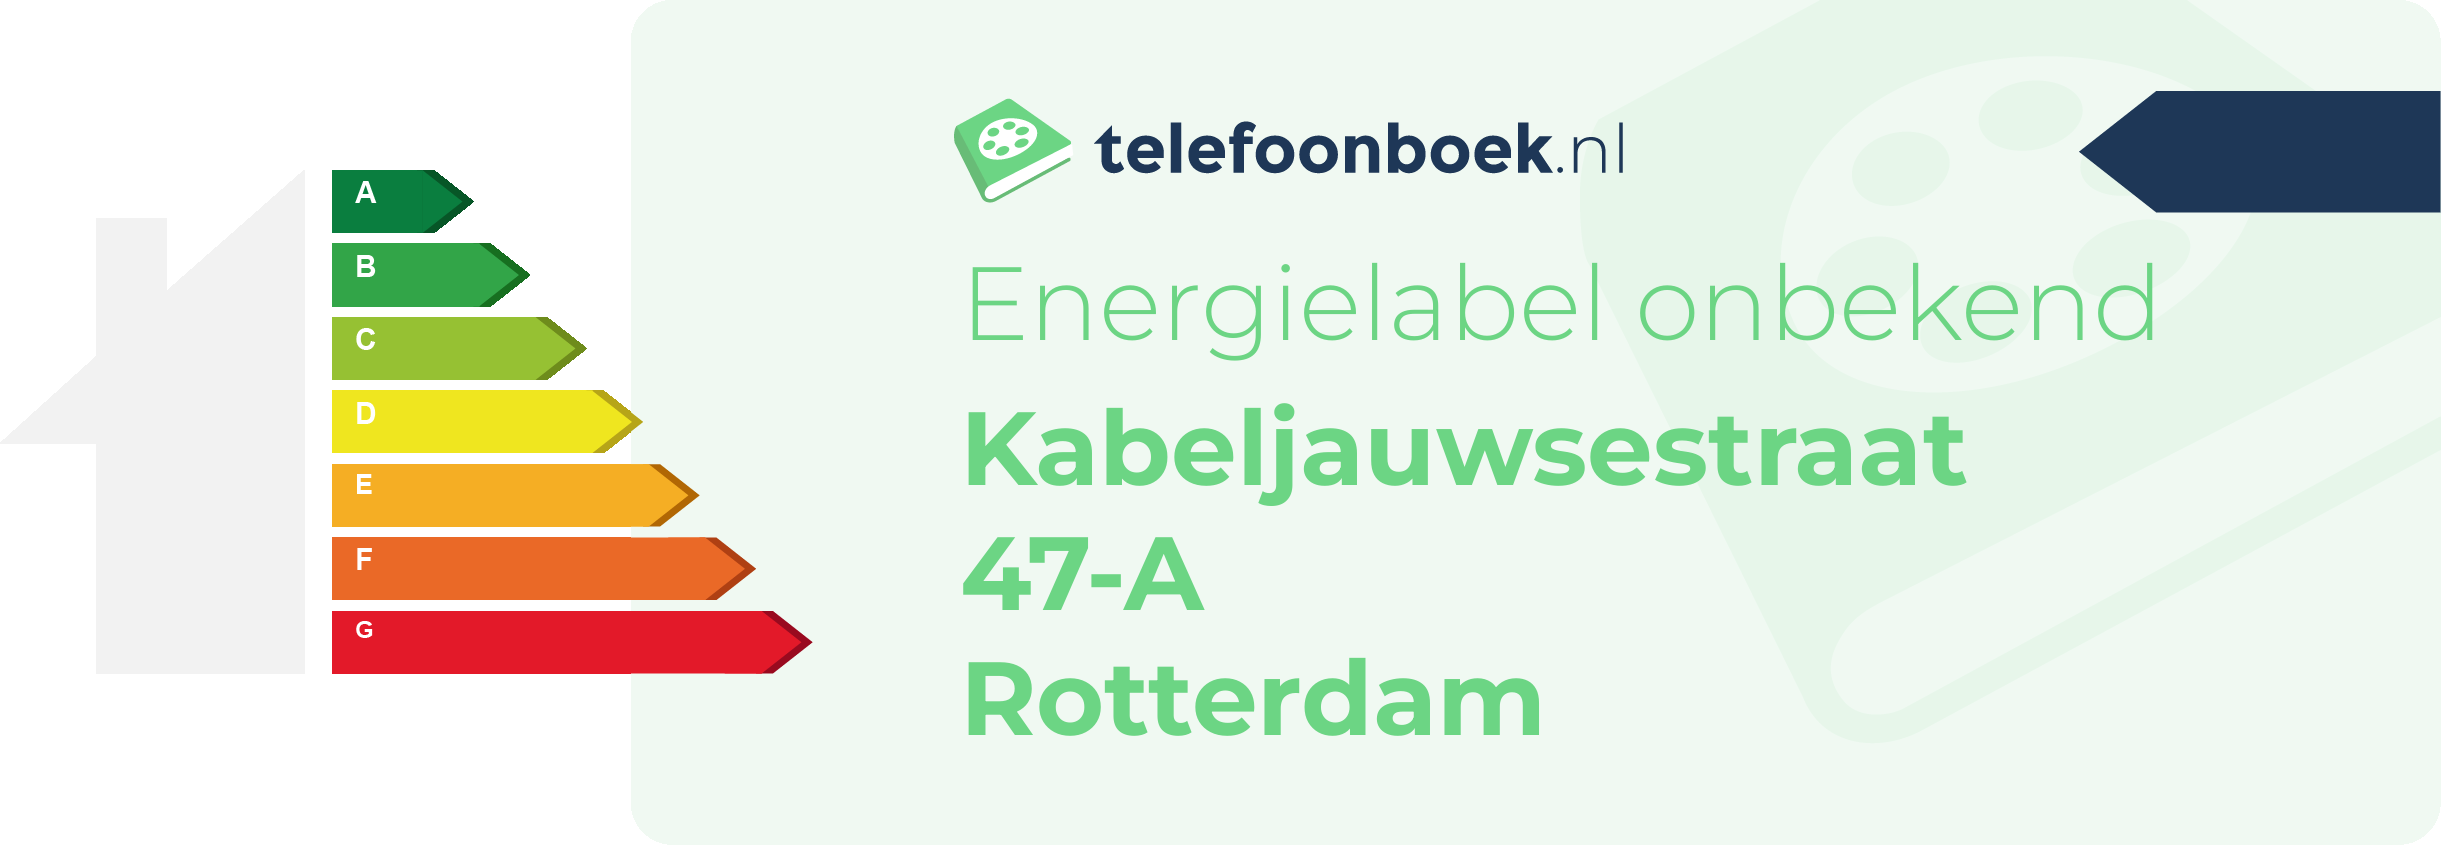 Energielabel Kabeljauwsestraat 47-A Rotterdam